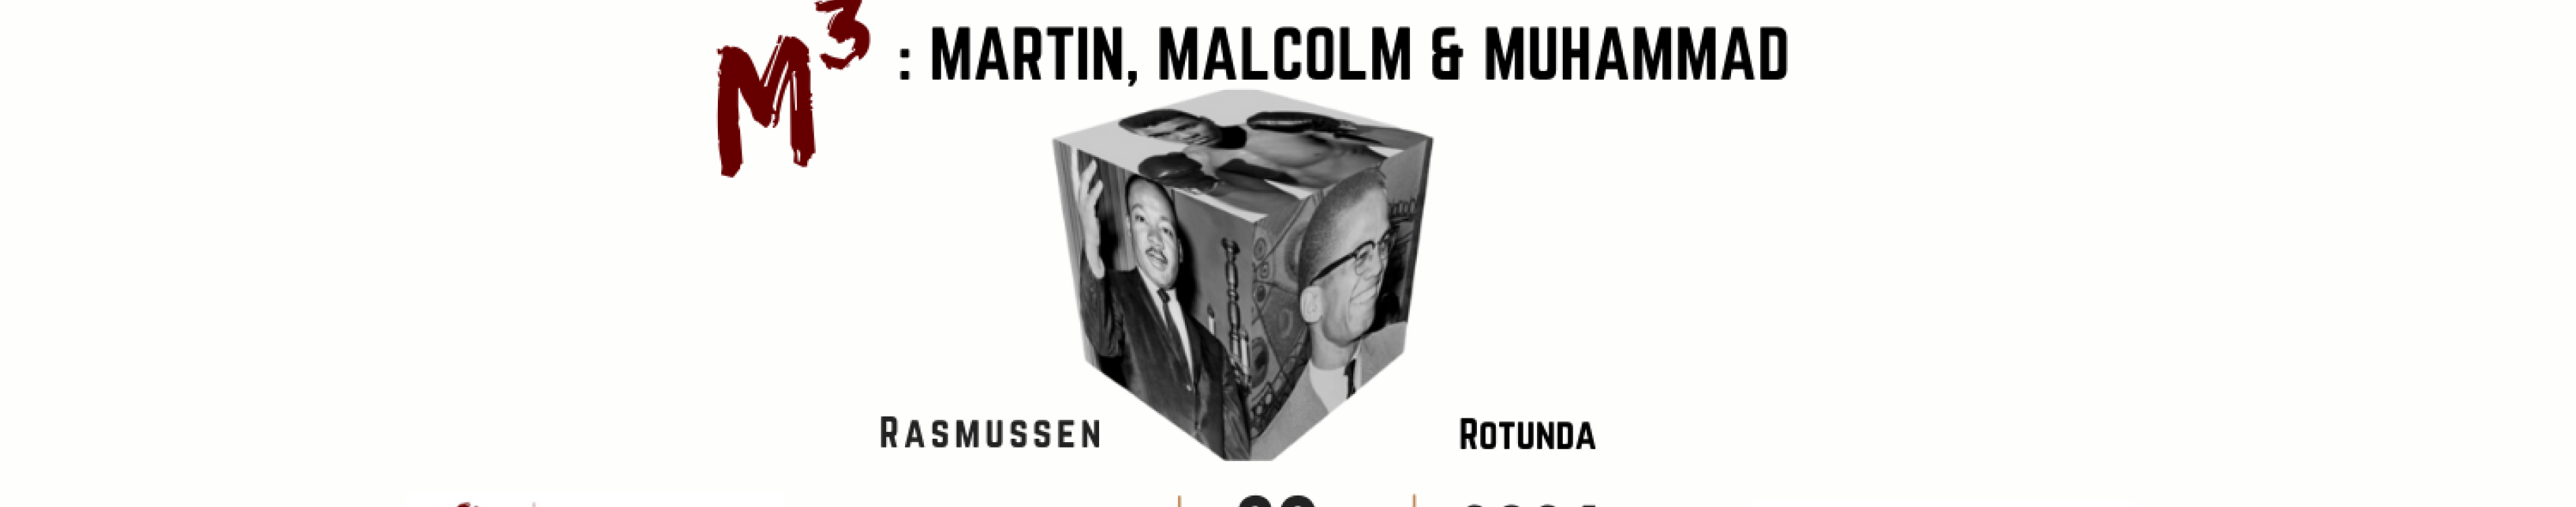 Martin, Malcolm & Muhammad